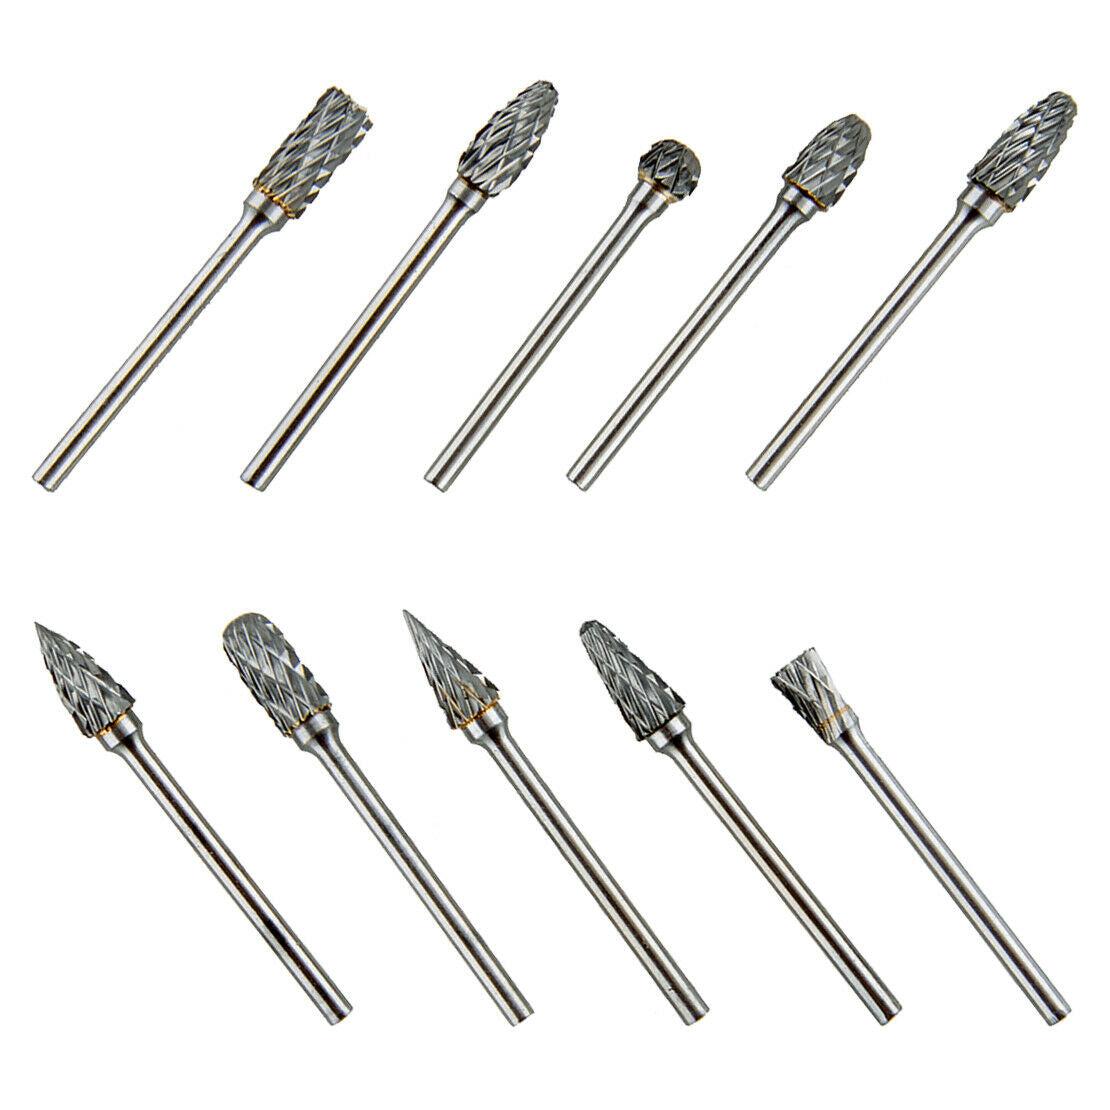 Tungsten Carbide Rotary Burr Drill Bits Die Grinder Shank 1/8" 3mm 10pcs per Kit